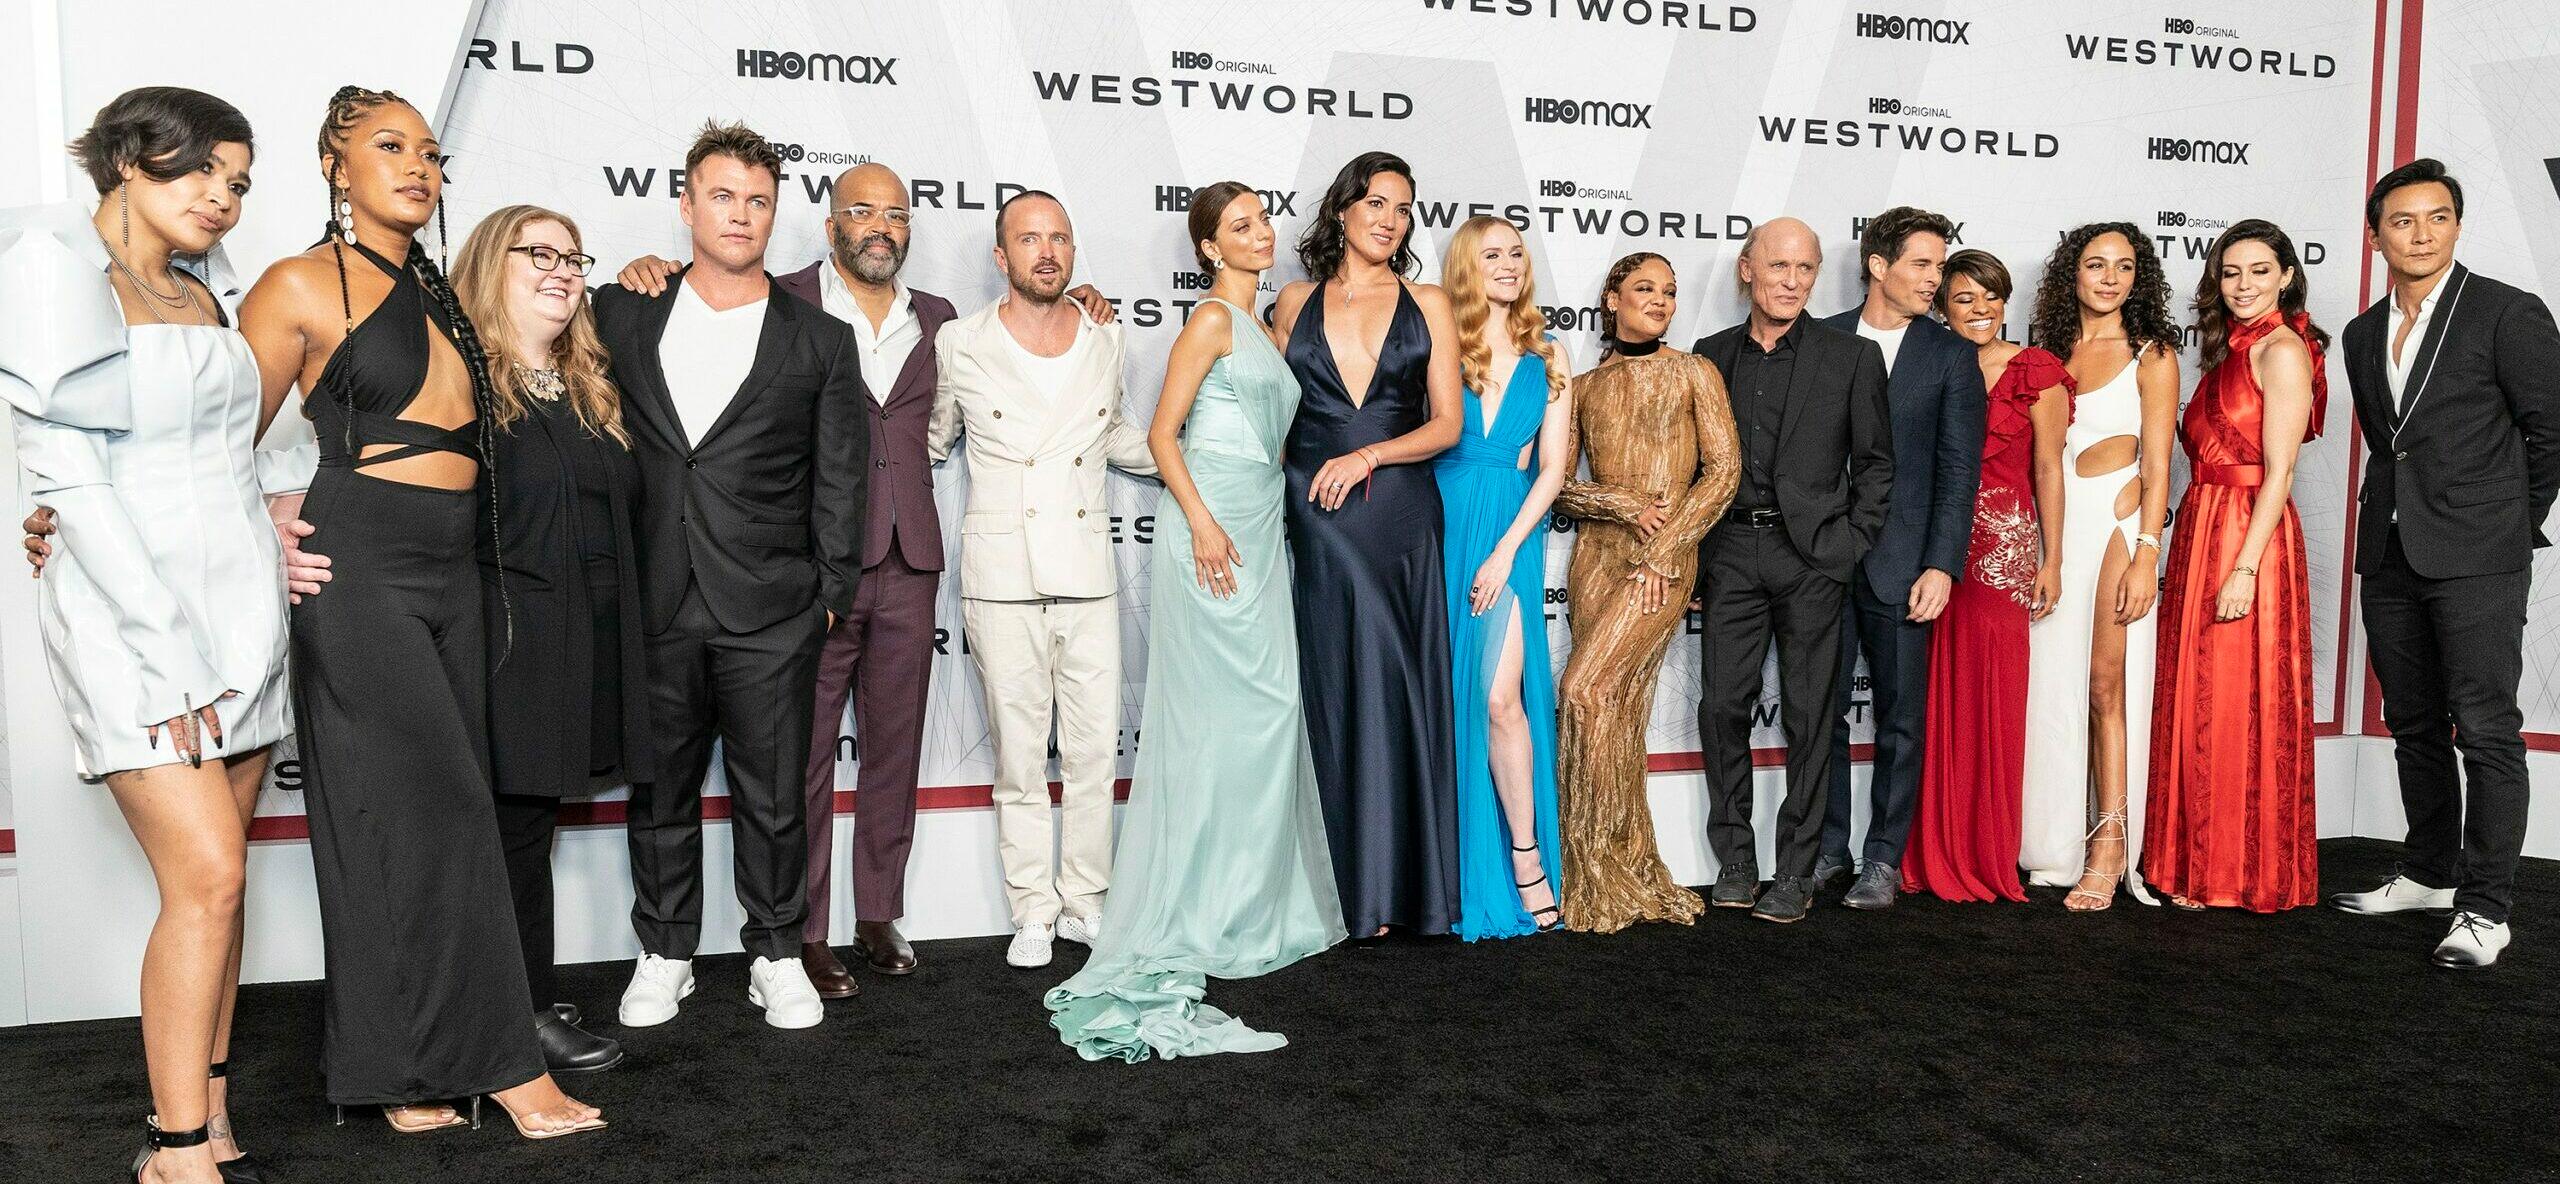 HBO cancels 'Westworld' after its 4th season : NPR